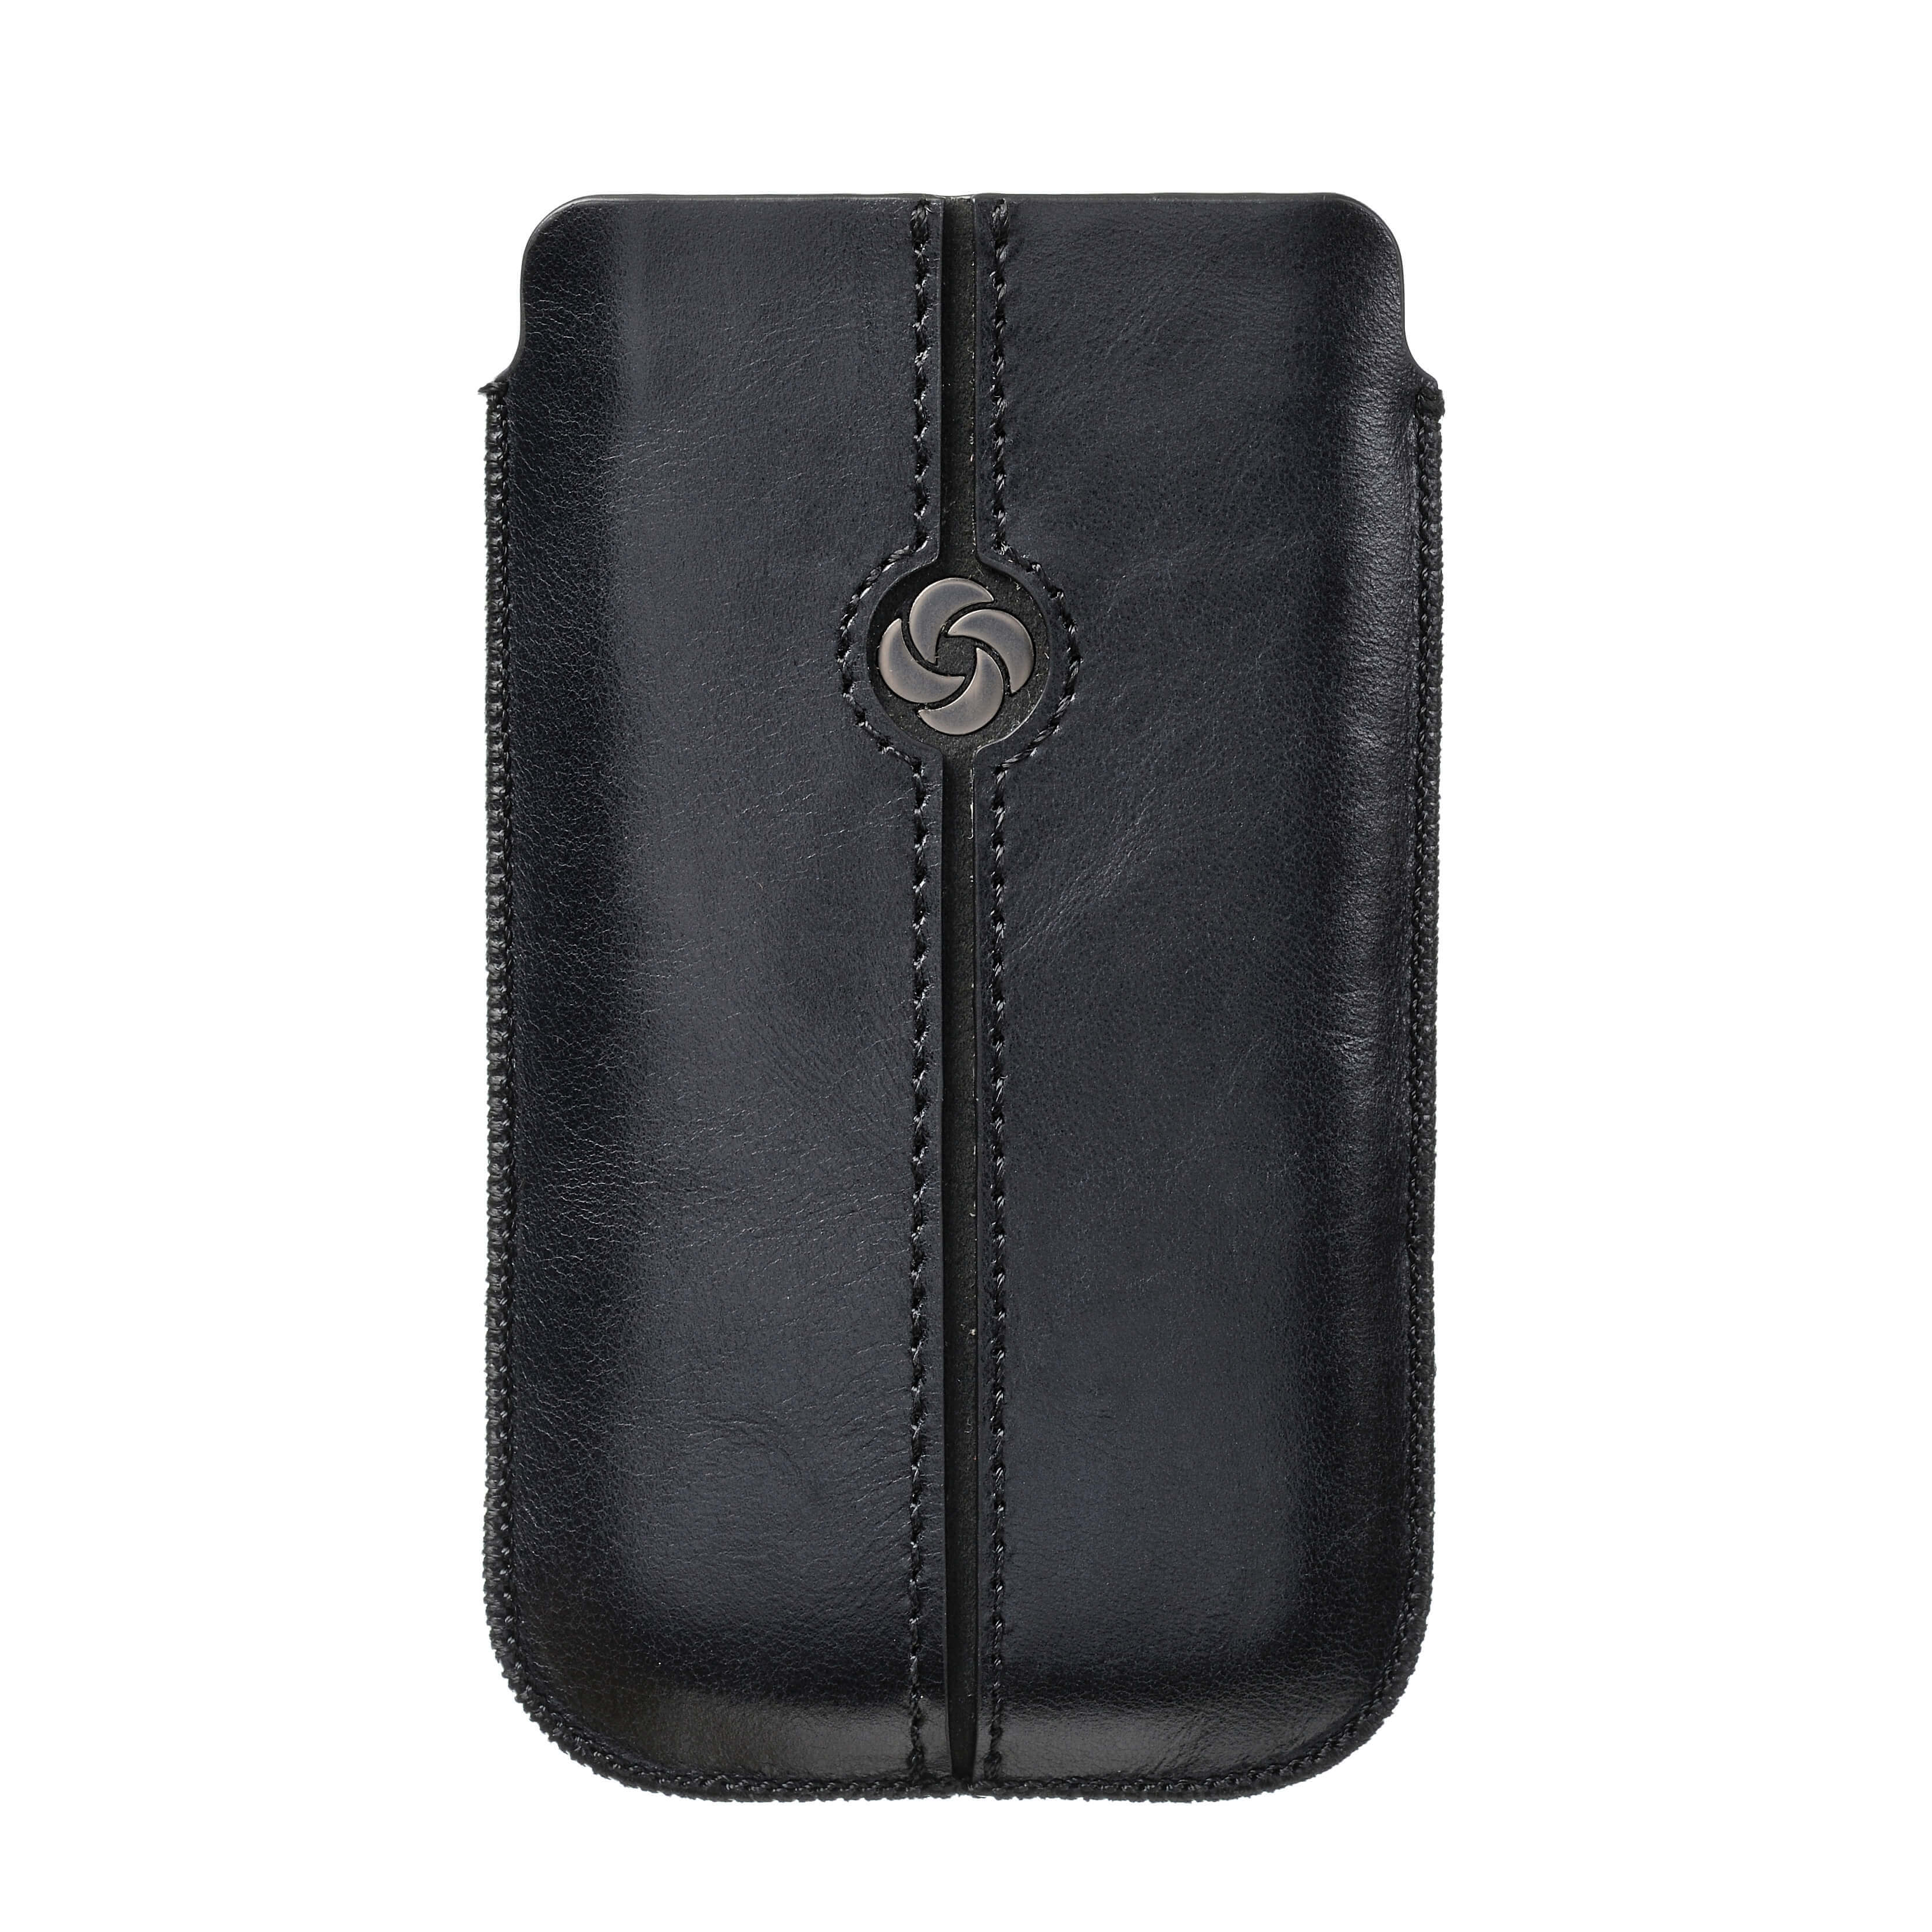 SAMSONITE Mobile Bag Dezir Leather Medium Black